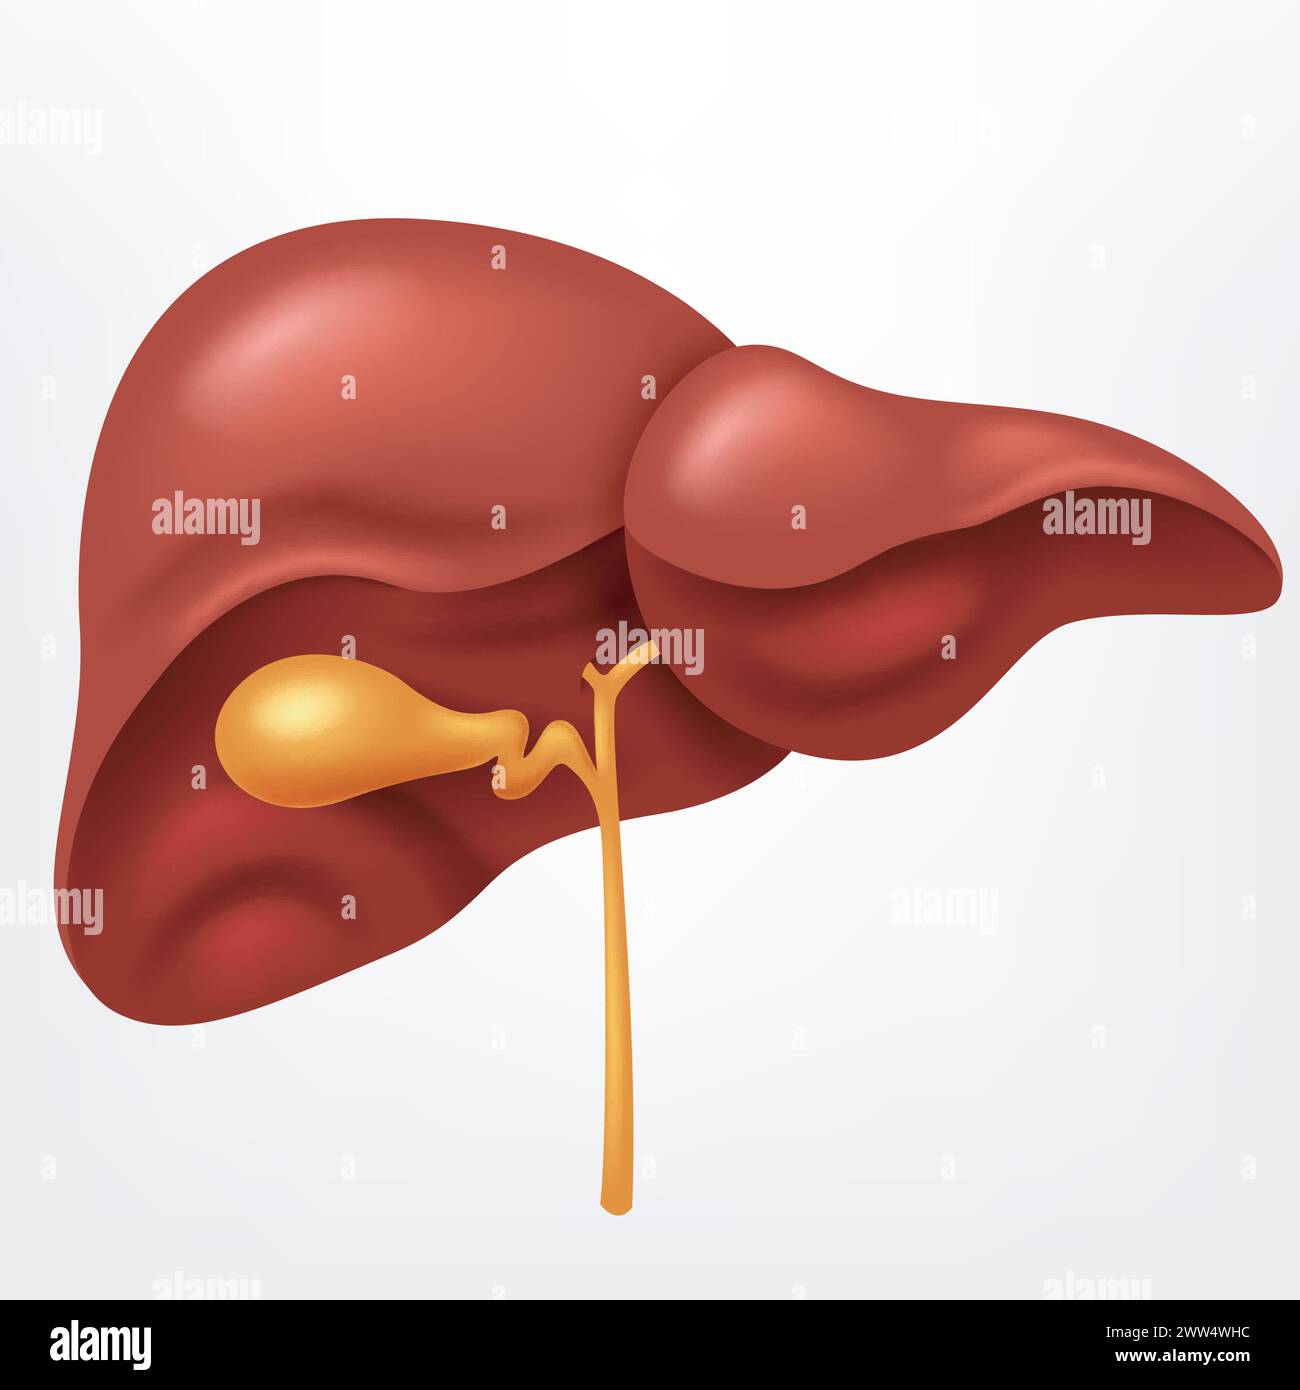 Fegato umano nel sistema digestivo, illustrazione vettoriale Illustrazione Vettoriale